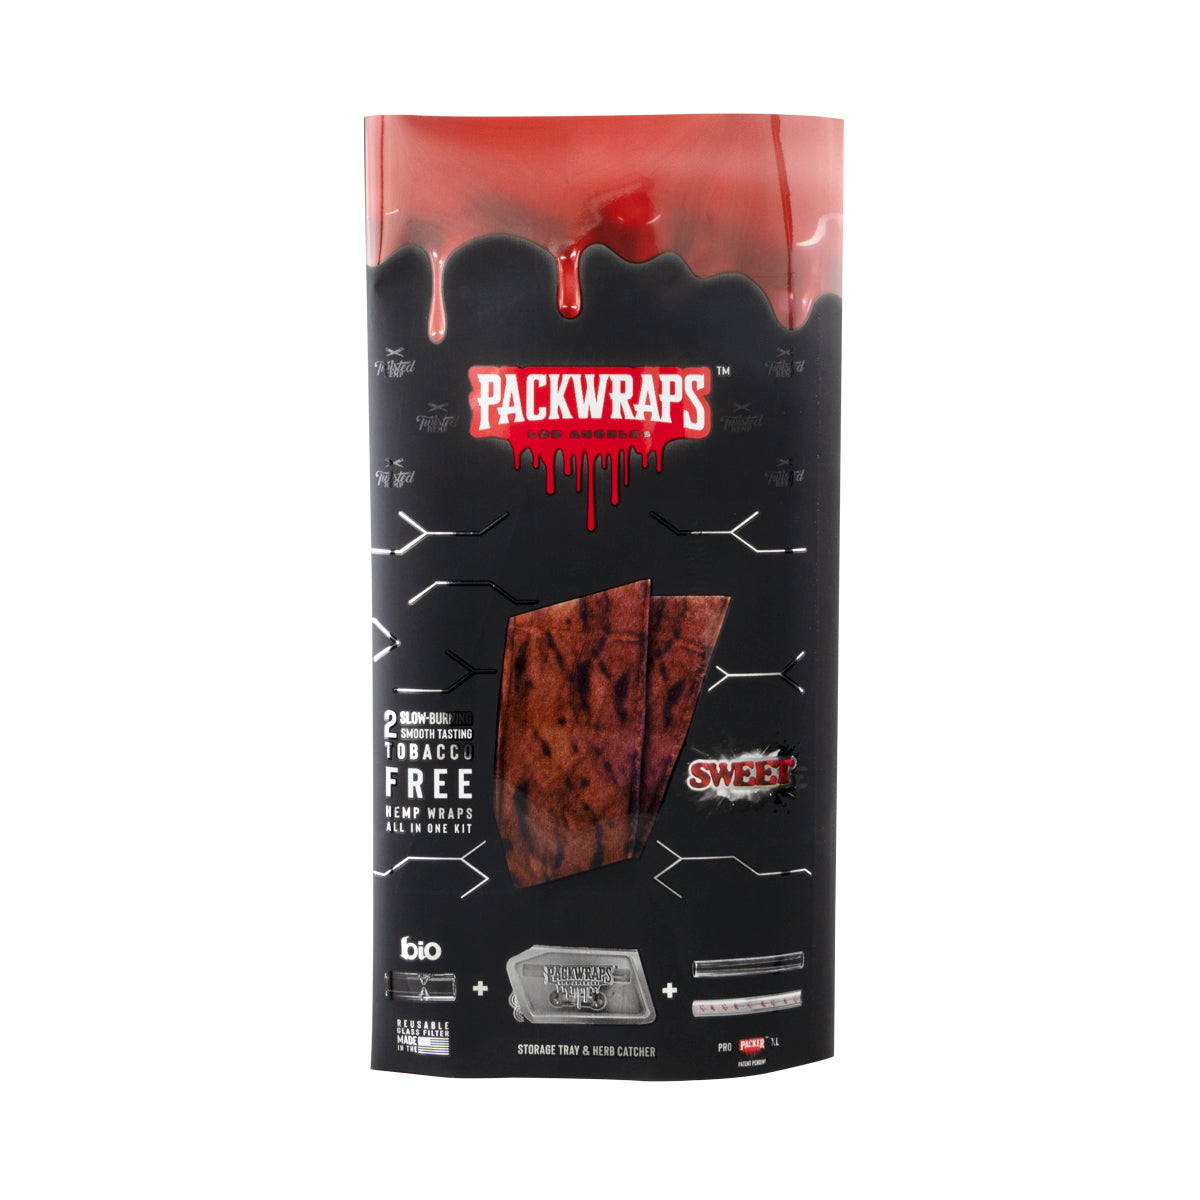 Packwraps X Twisted X Bio Wrap Kit - Sweet - 10 Pack Box